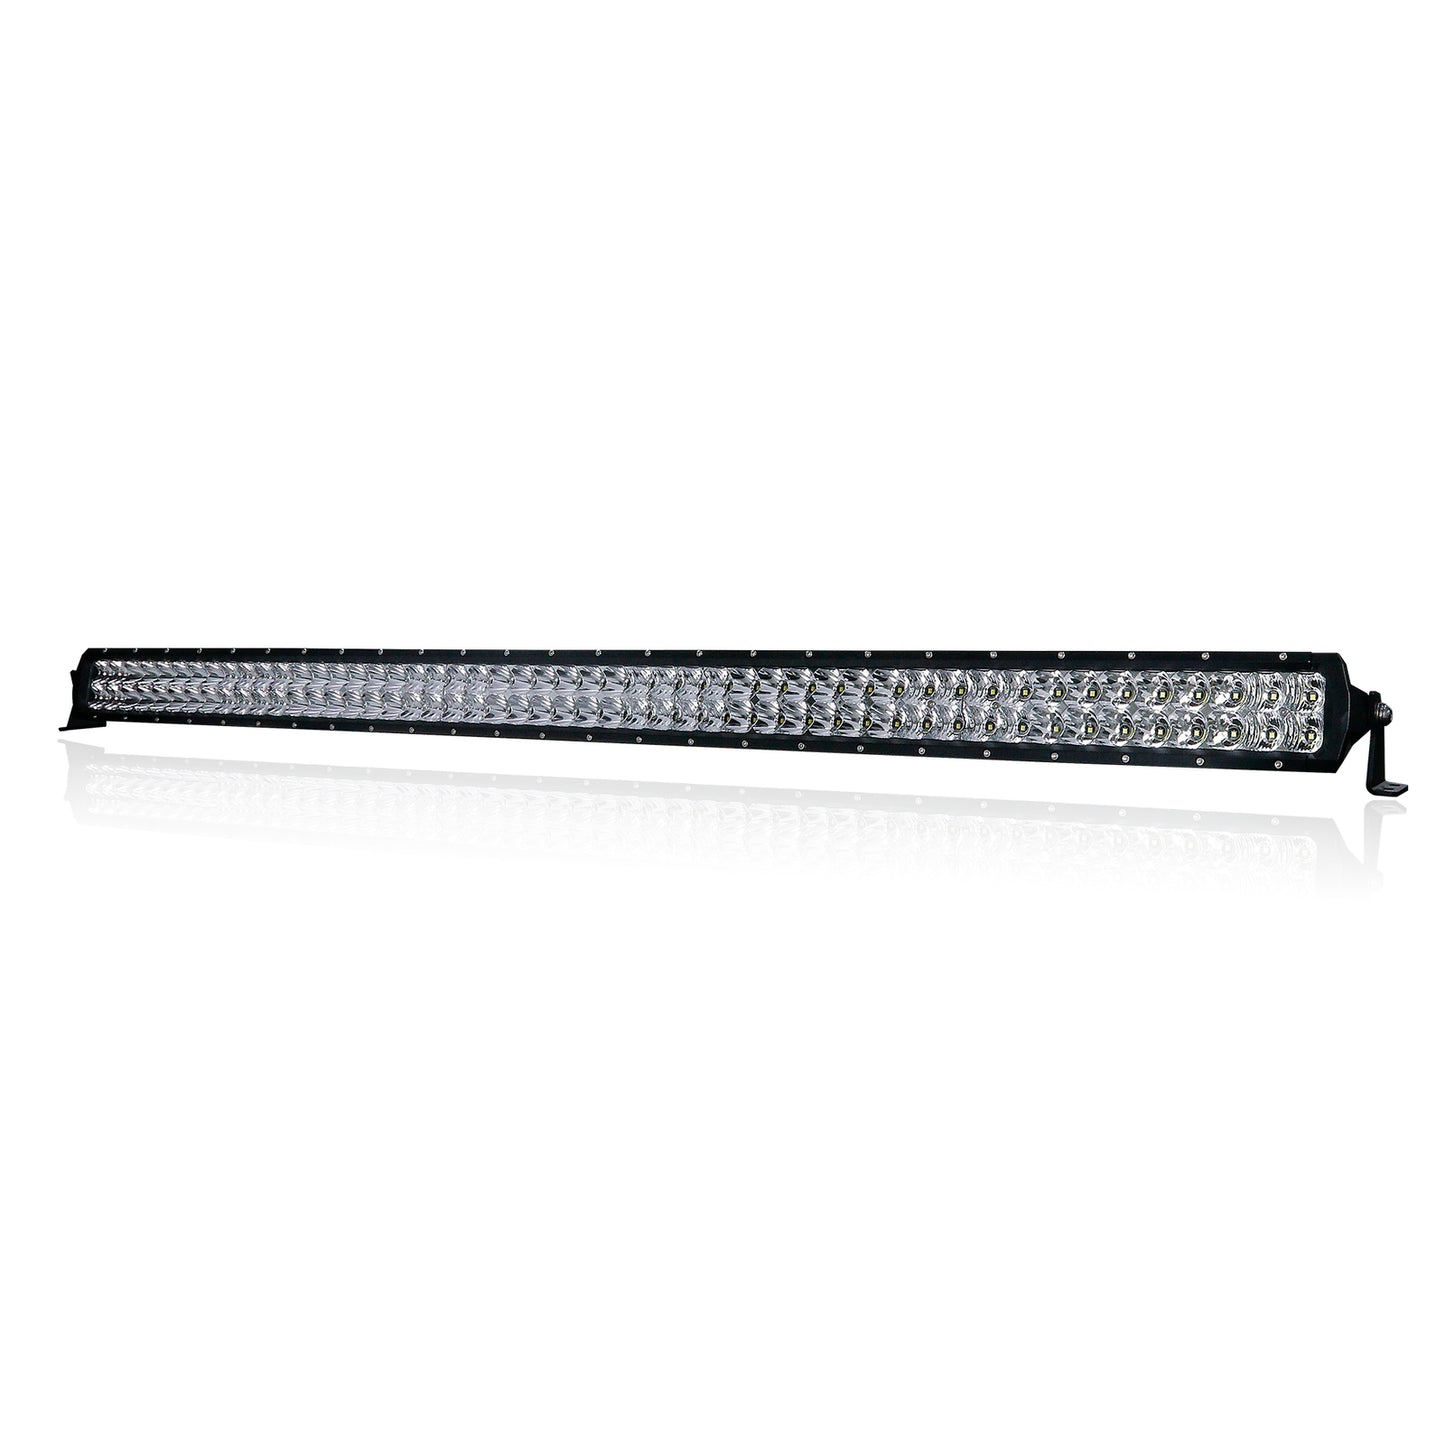 PERCEPTION LIGHTING DRX Series 51.5" LED Dual Row Osram Light Bar